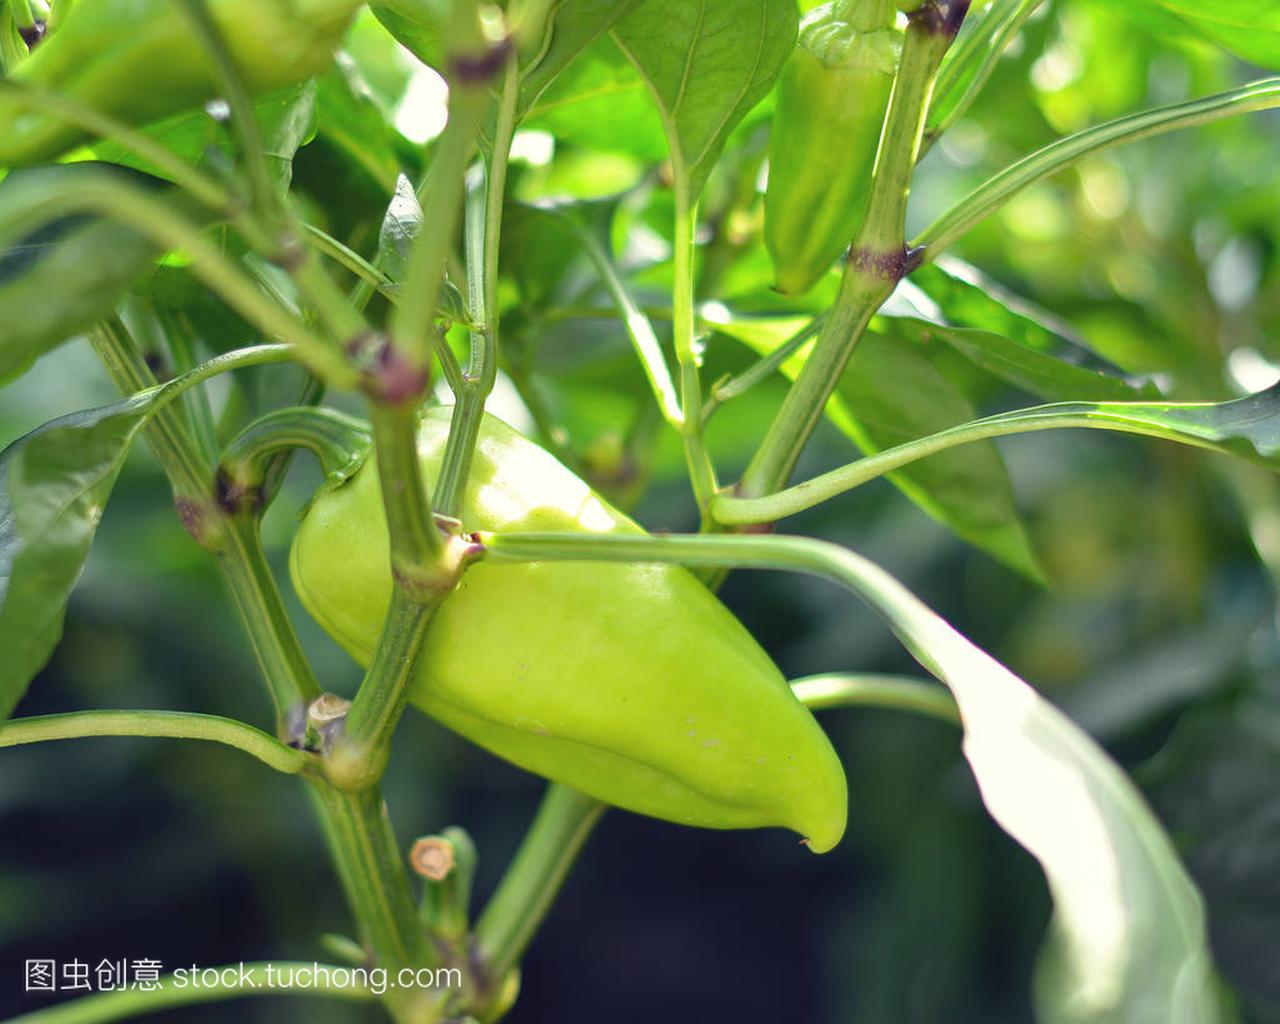 Bulgarian pepper grows on a Bush